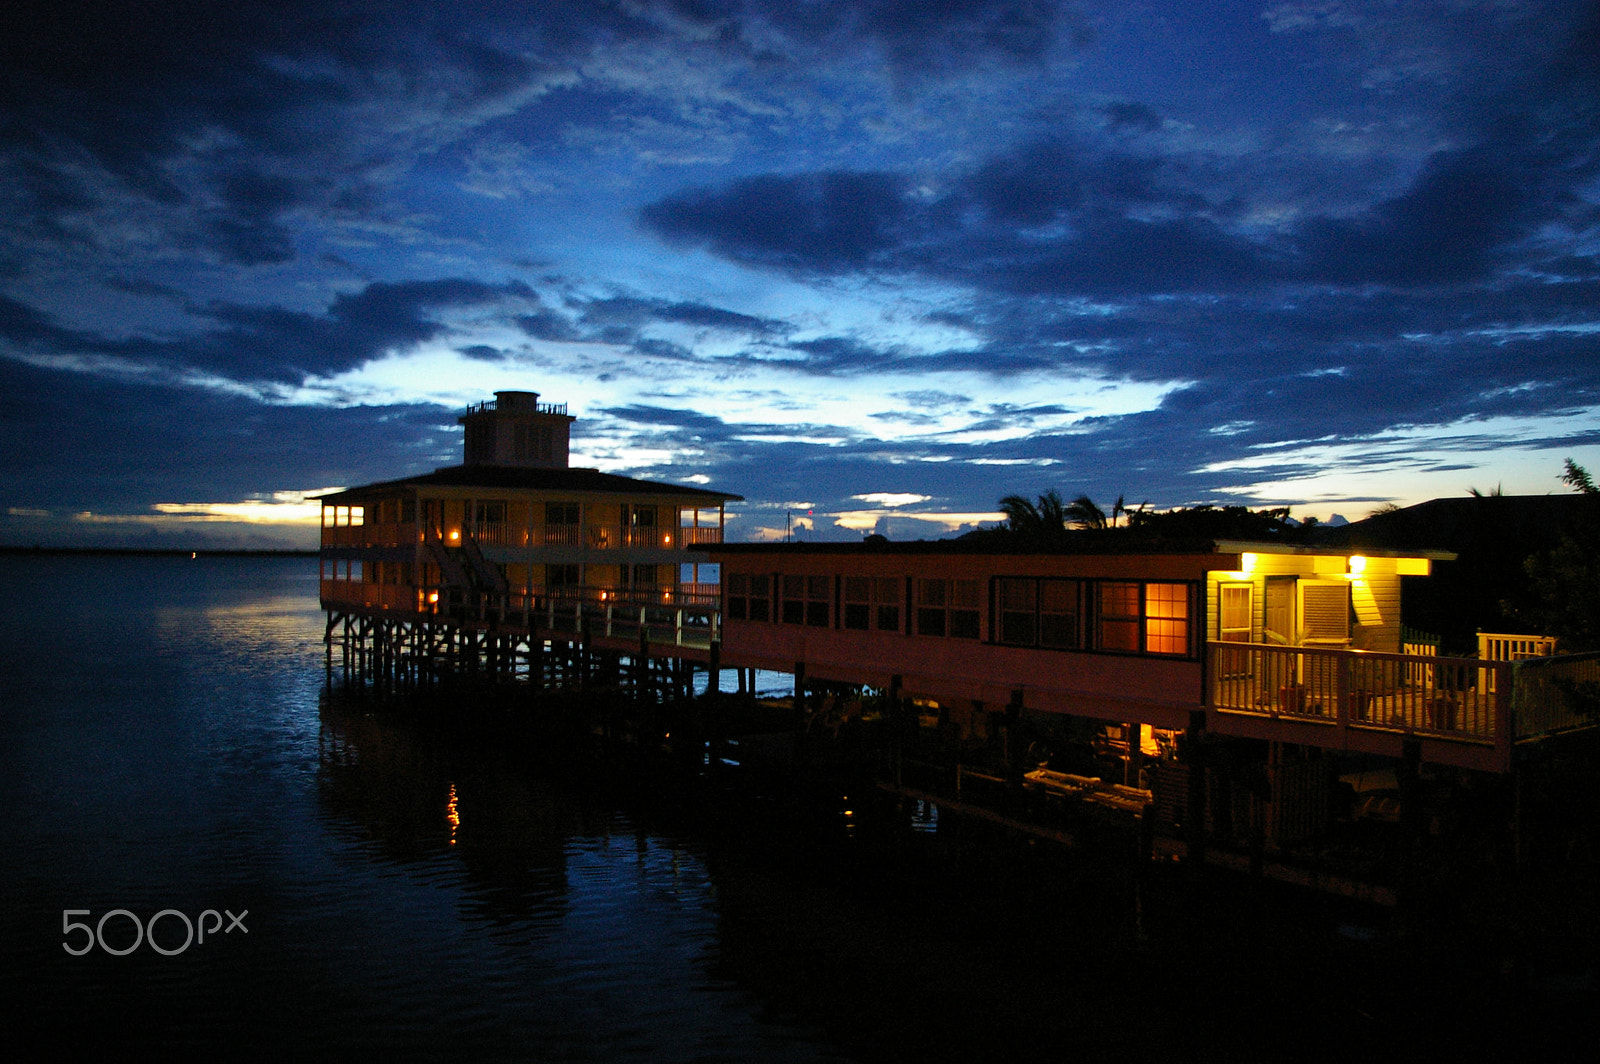 Pentax *ist DL sample photo. Hotel en la isla de utila honduras en anochecer azul photography